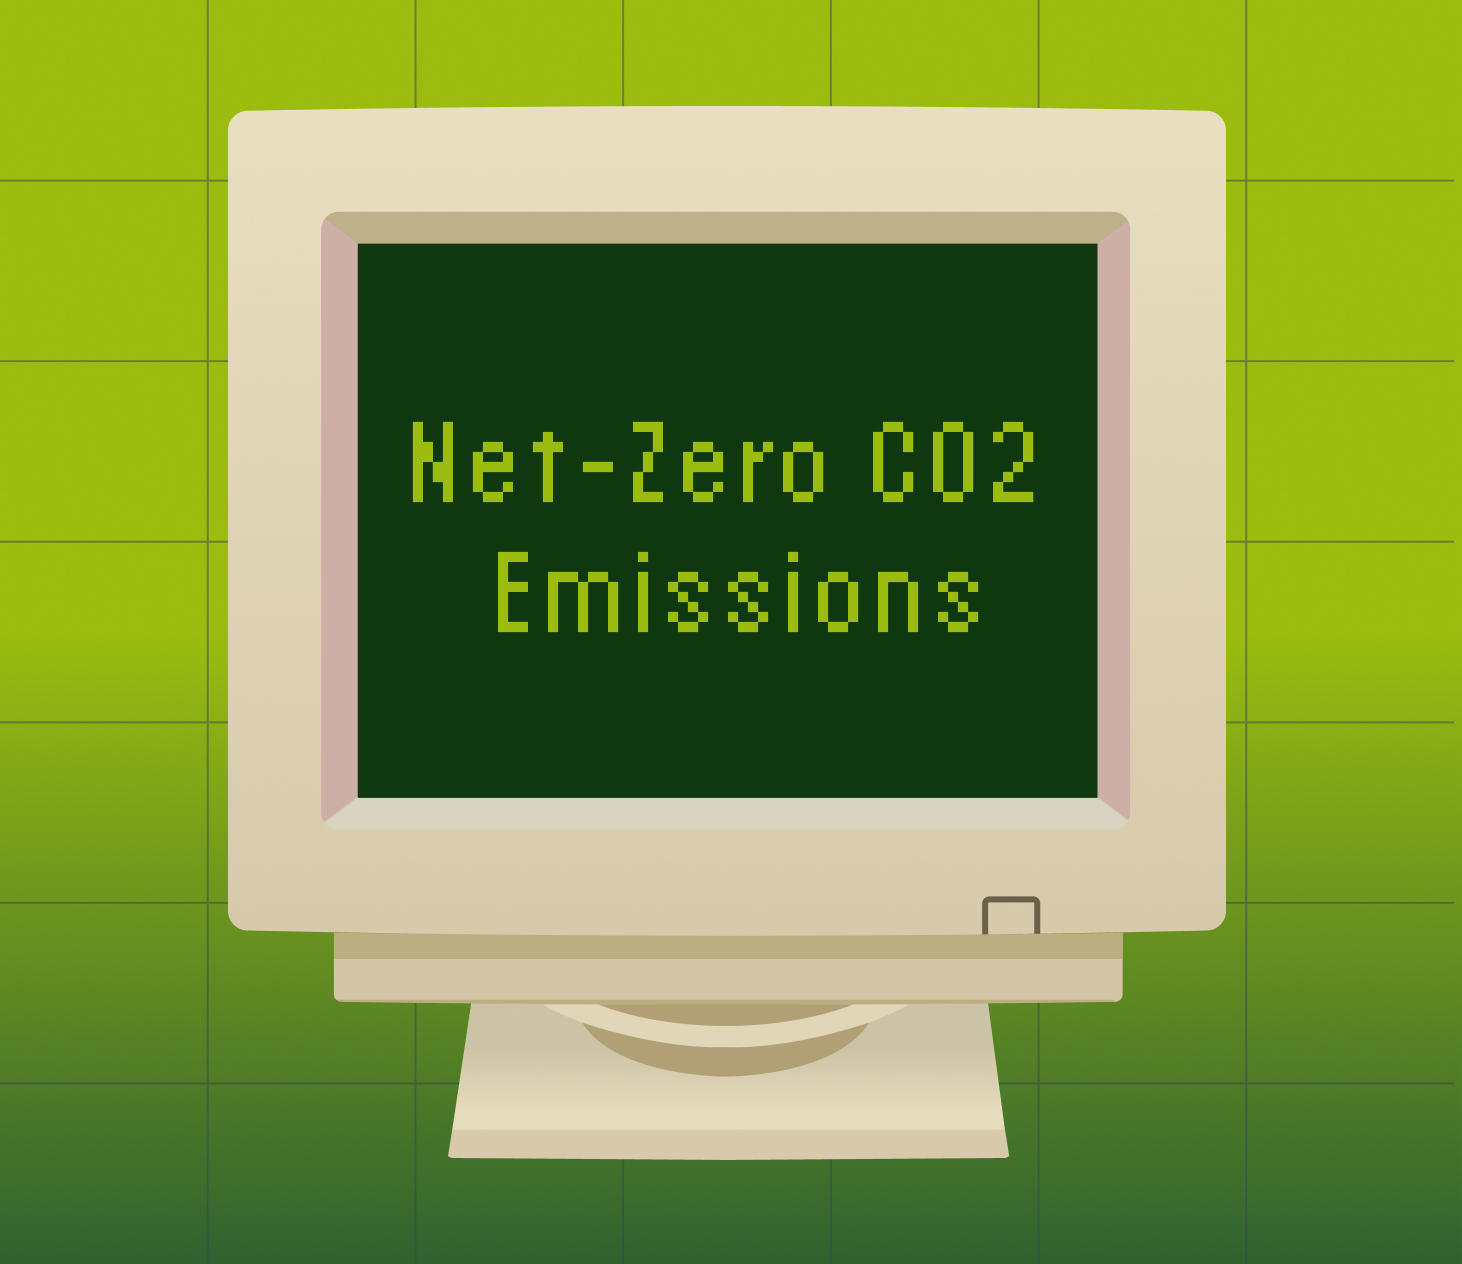 Our Net-Zero CO2 Emissions Goal